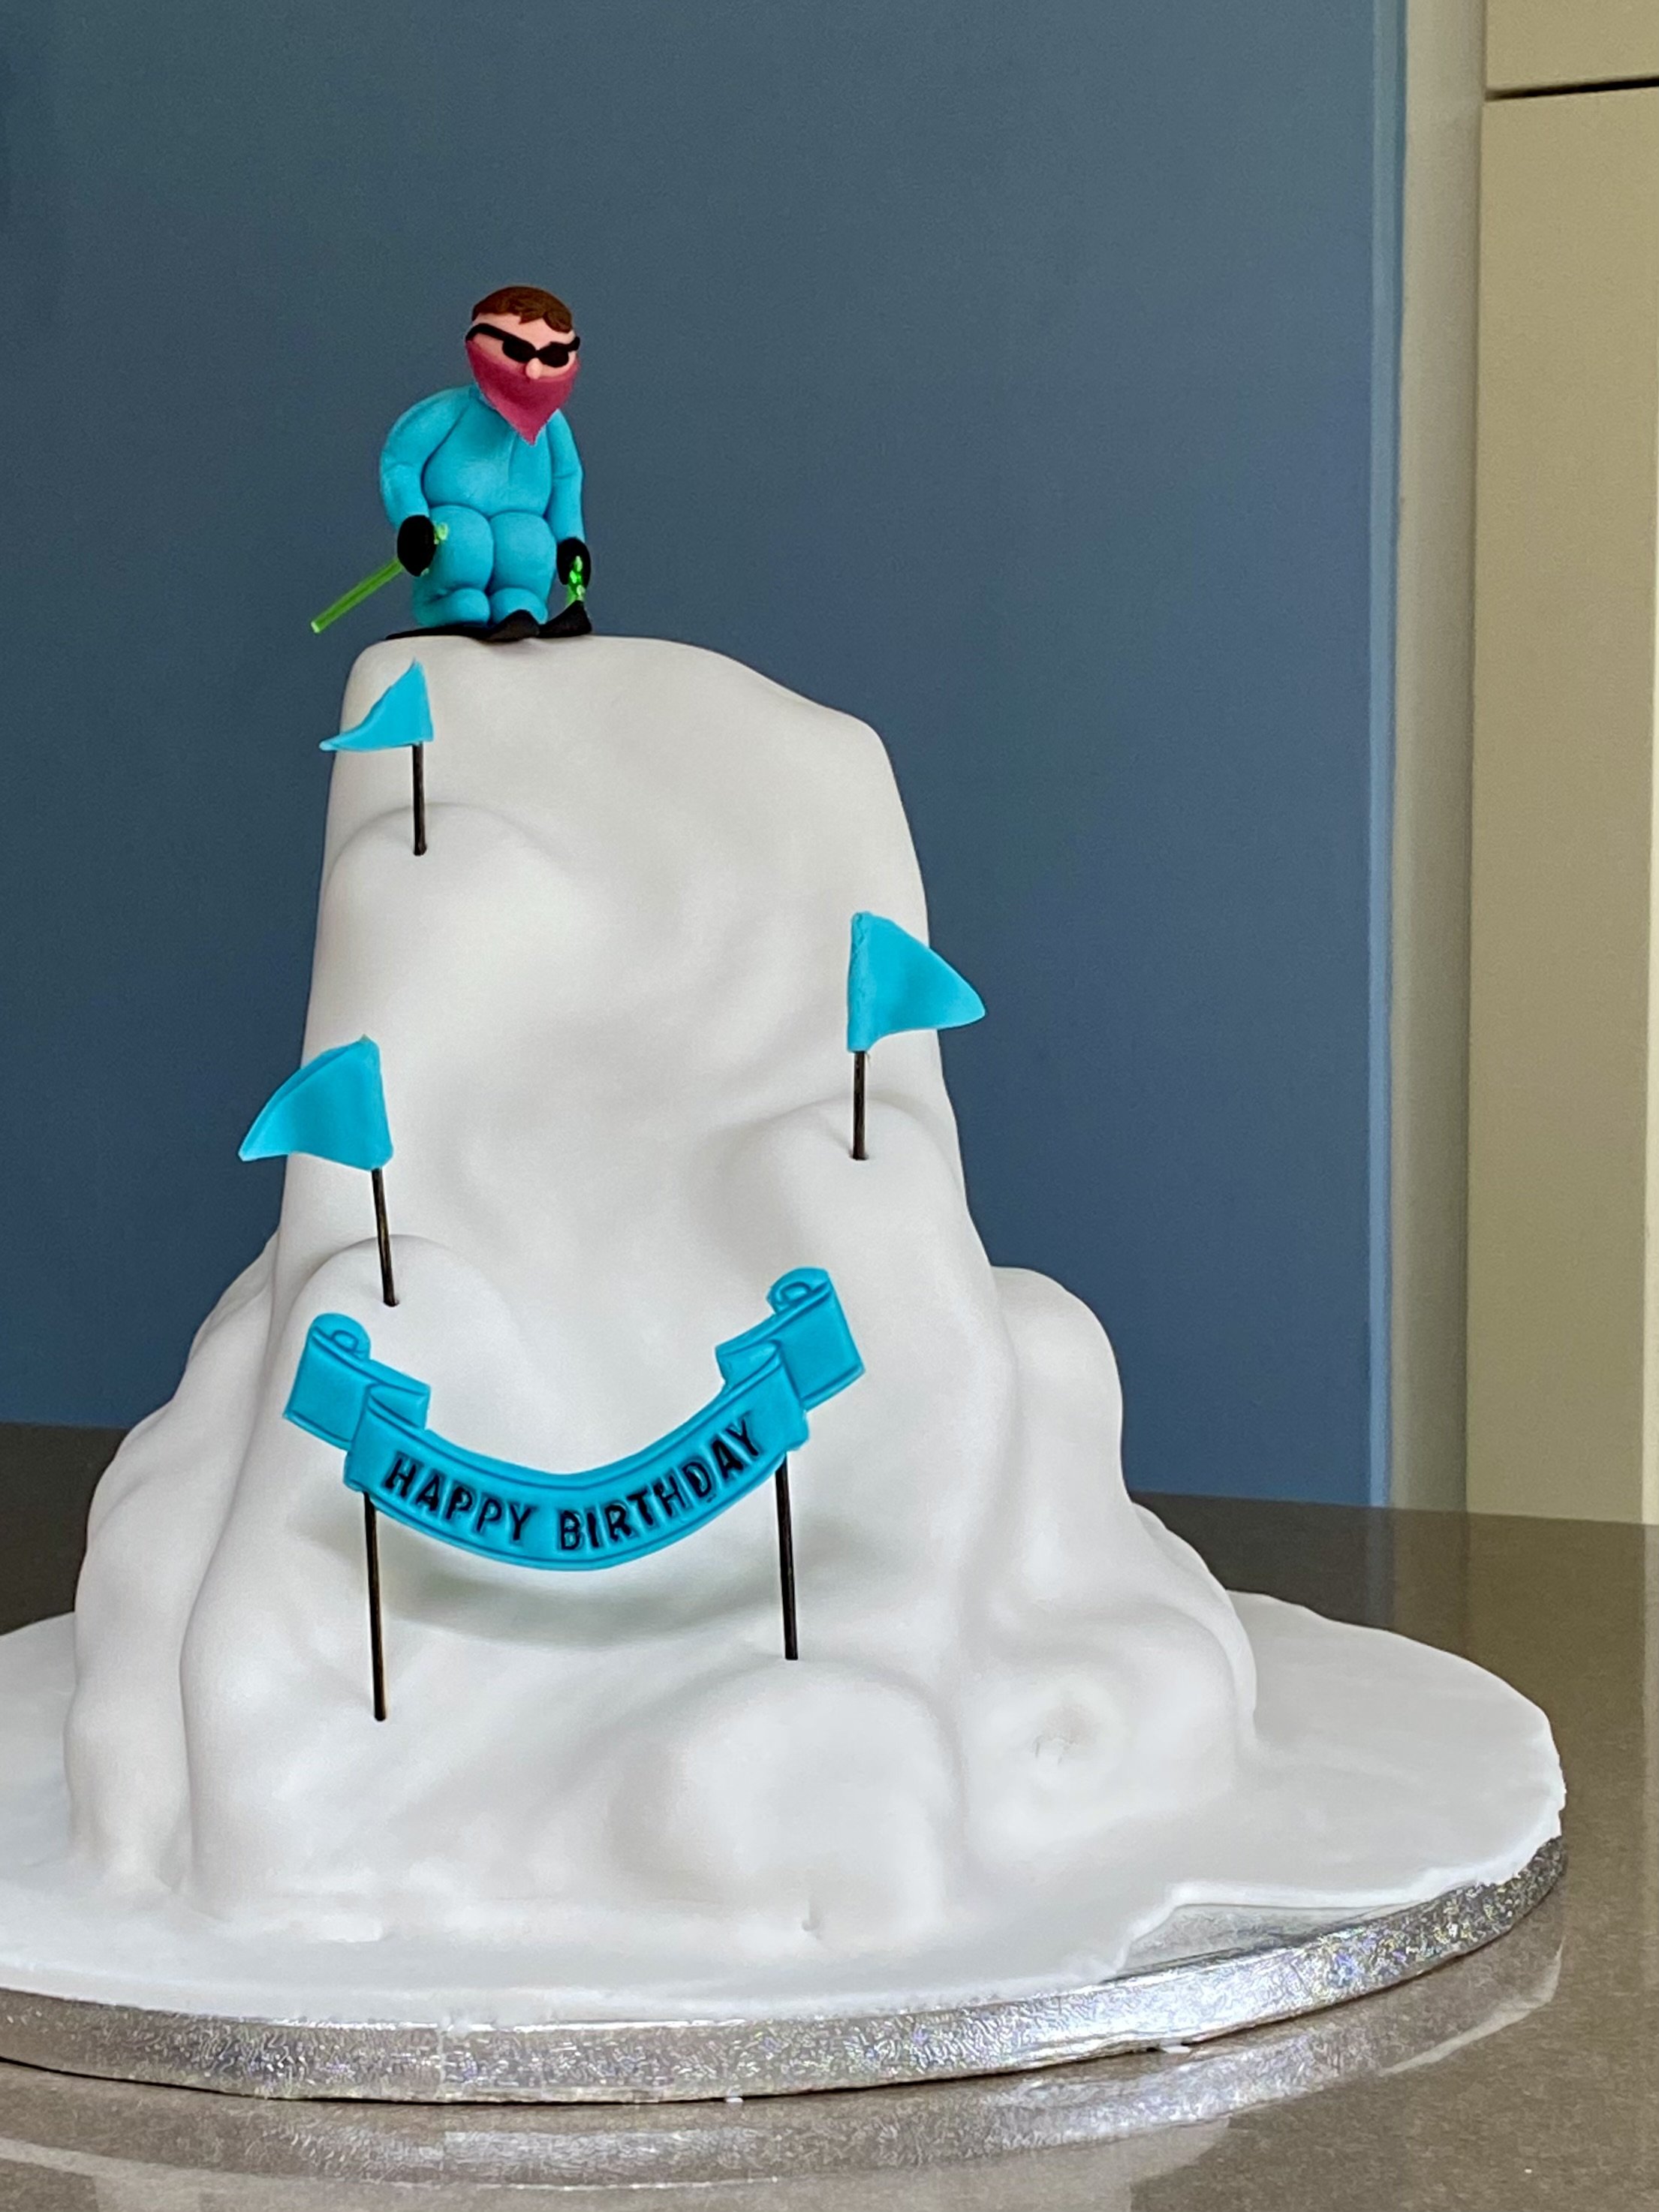 Snowboarder Fondant Cake Topper Kit, Snowboard Cake Decorations